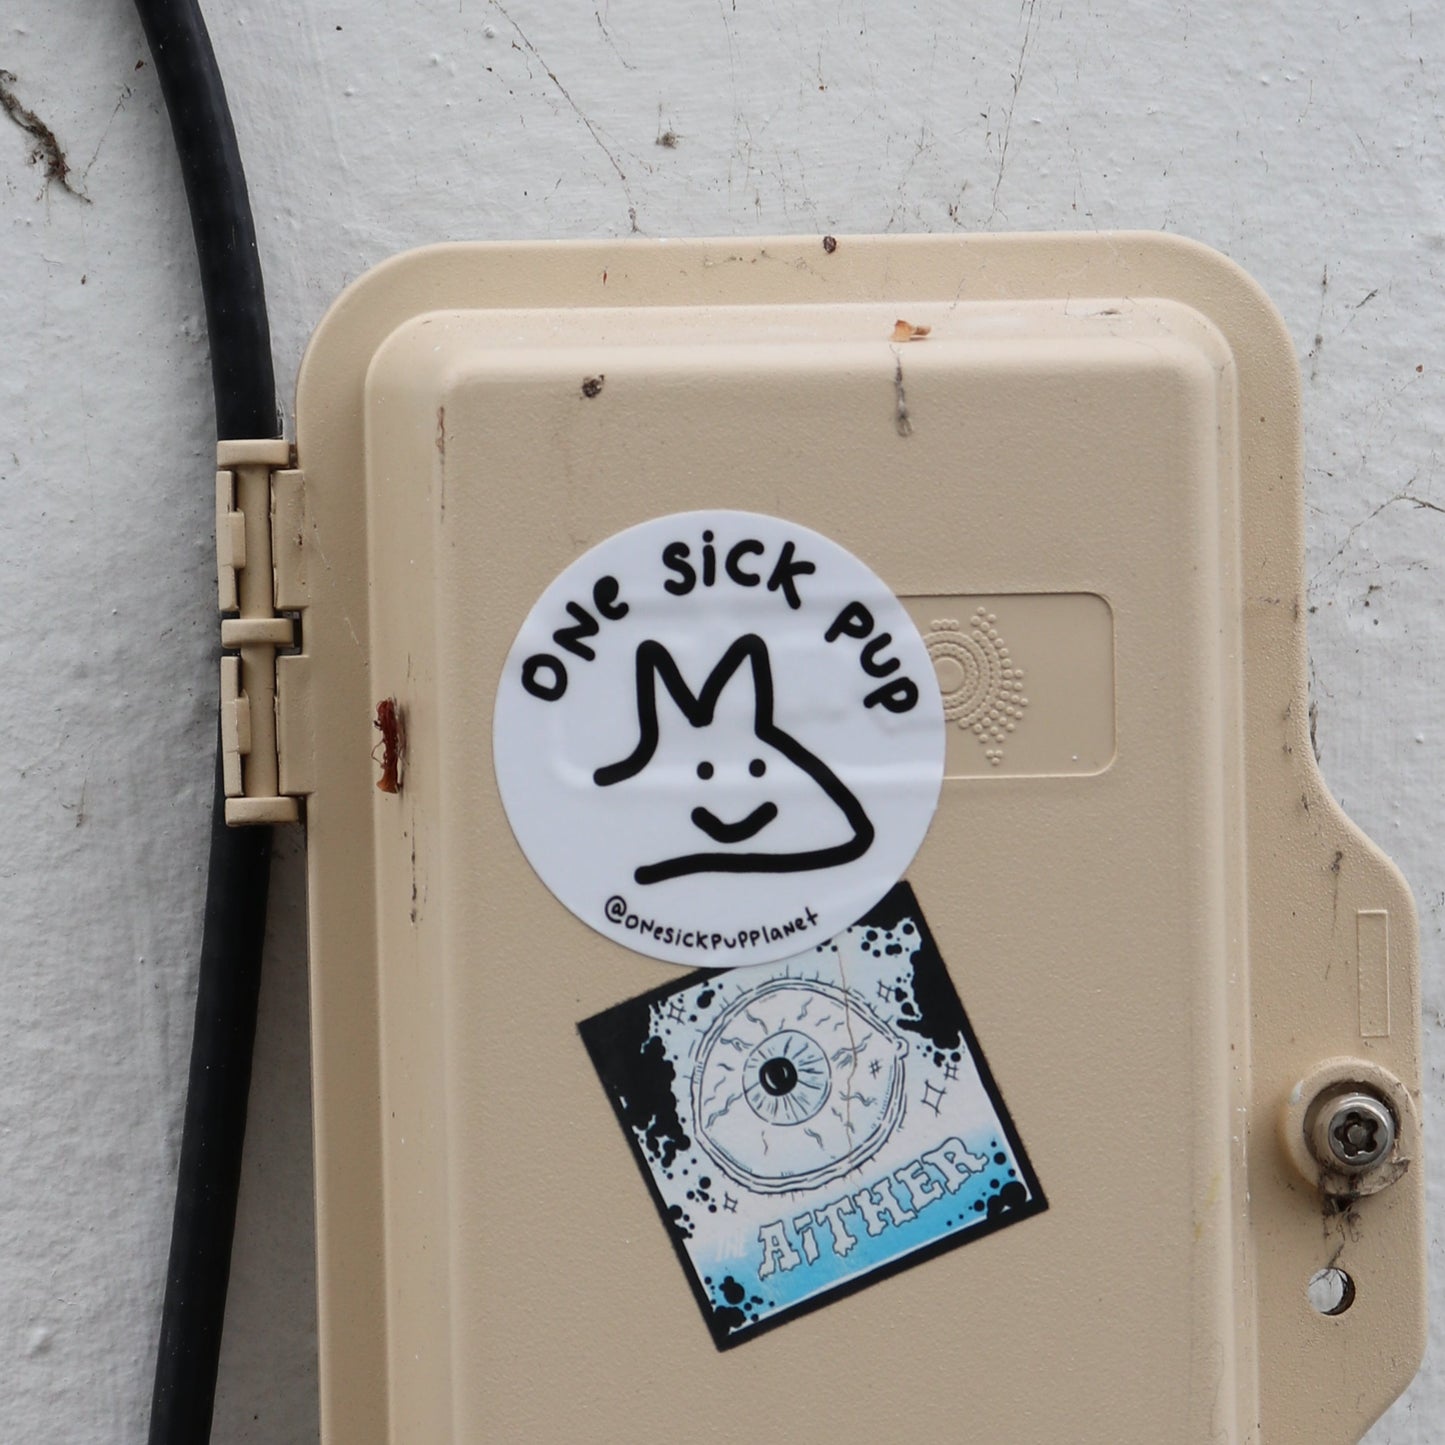 One Sick Pup Sticker